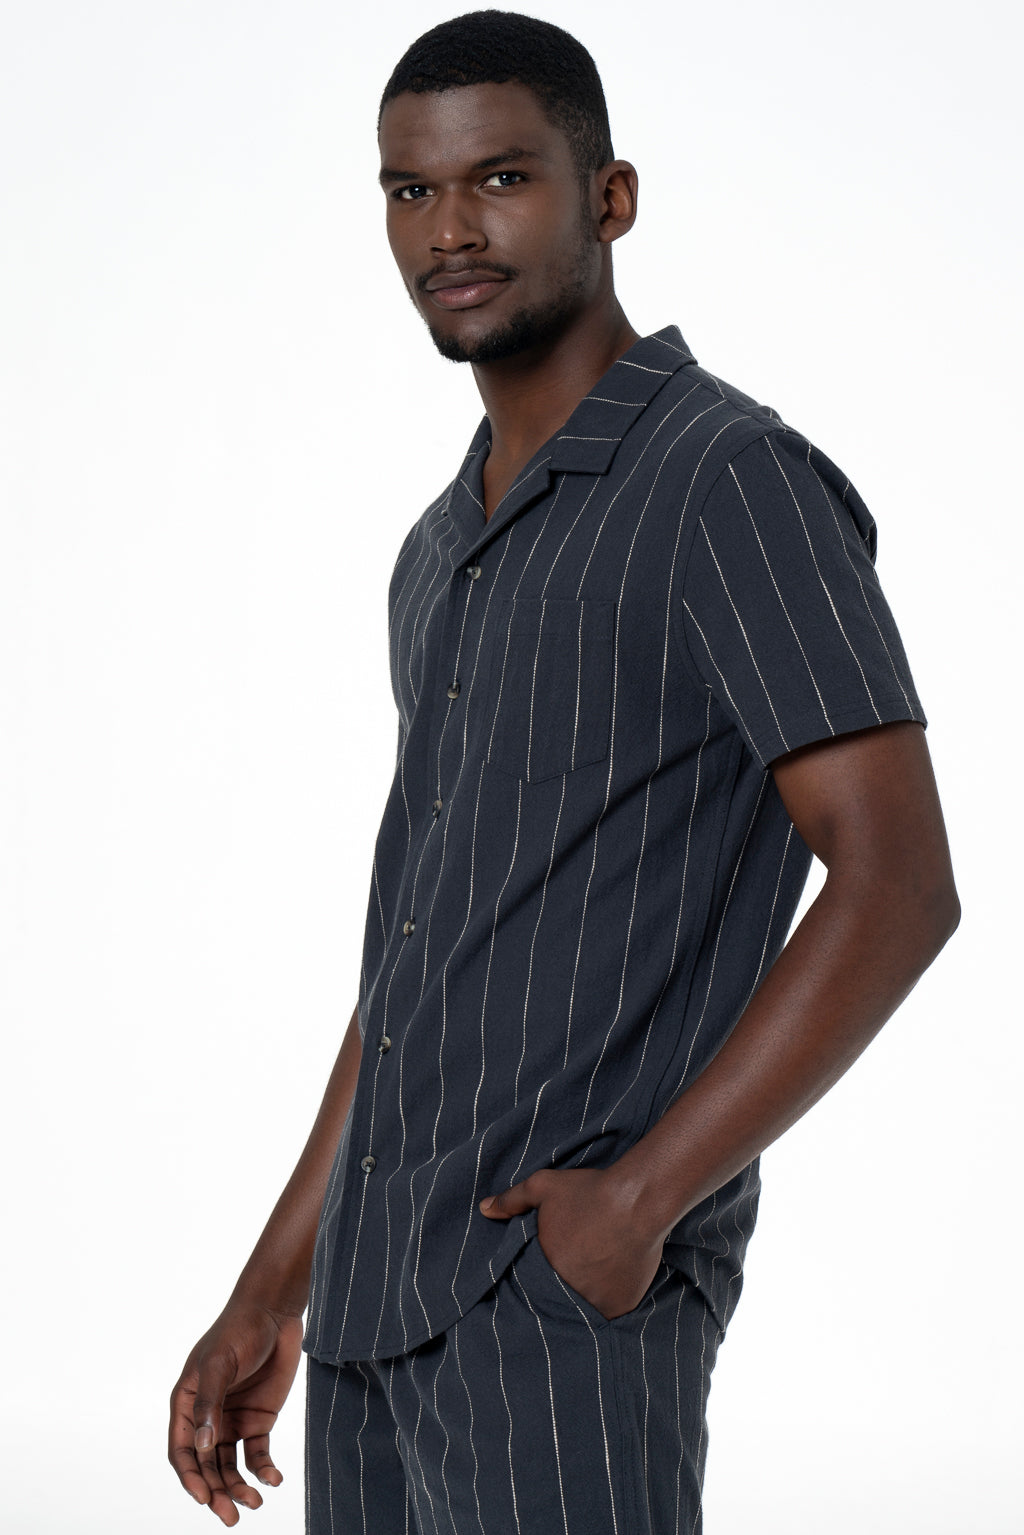 Textured Striped Shirt _ 141636 _ Black